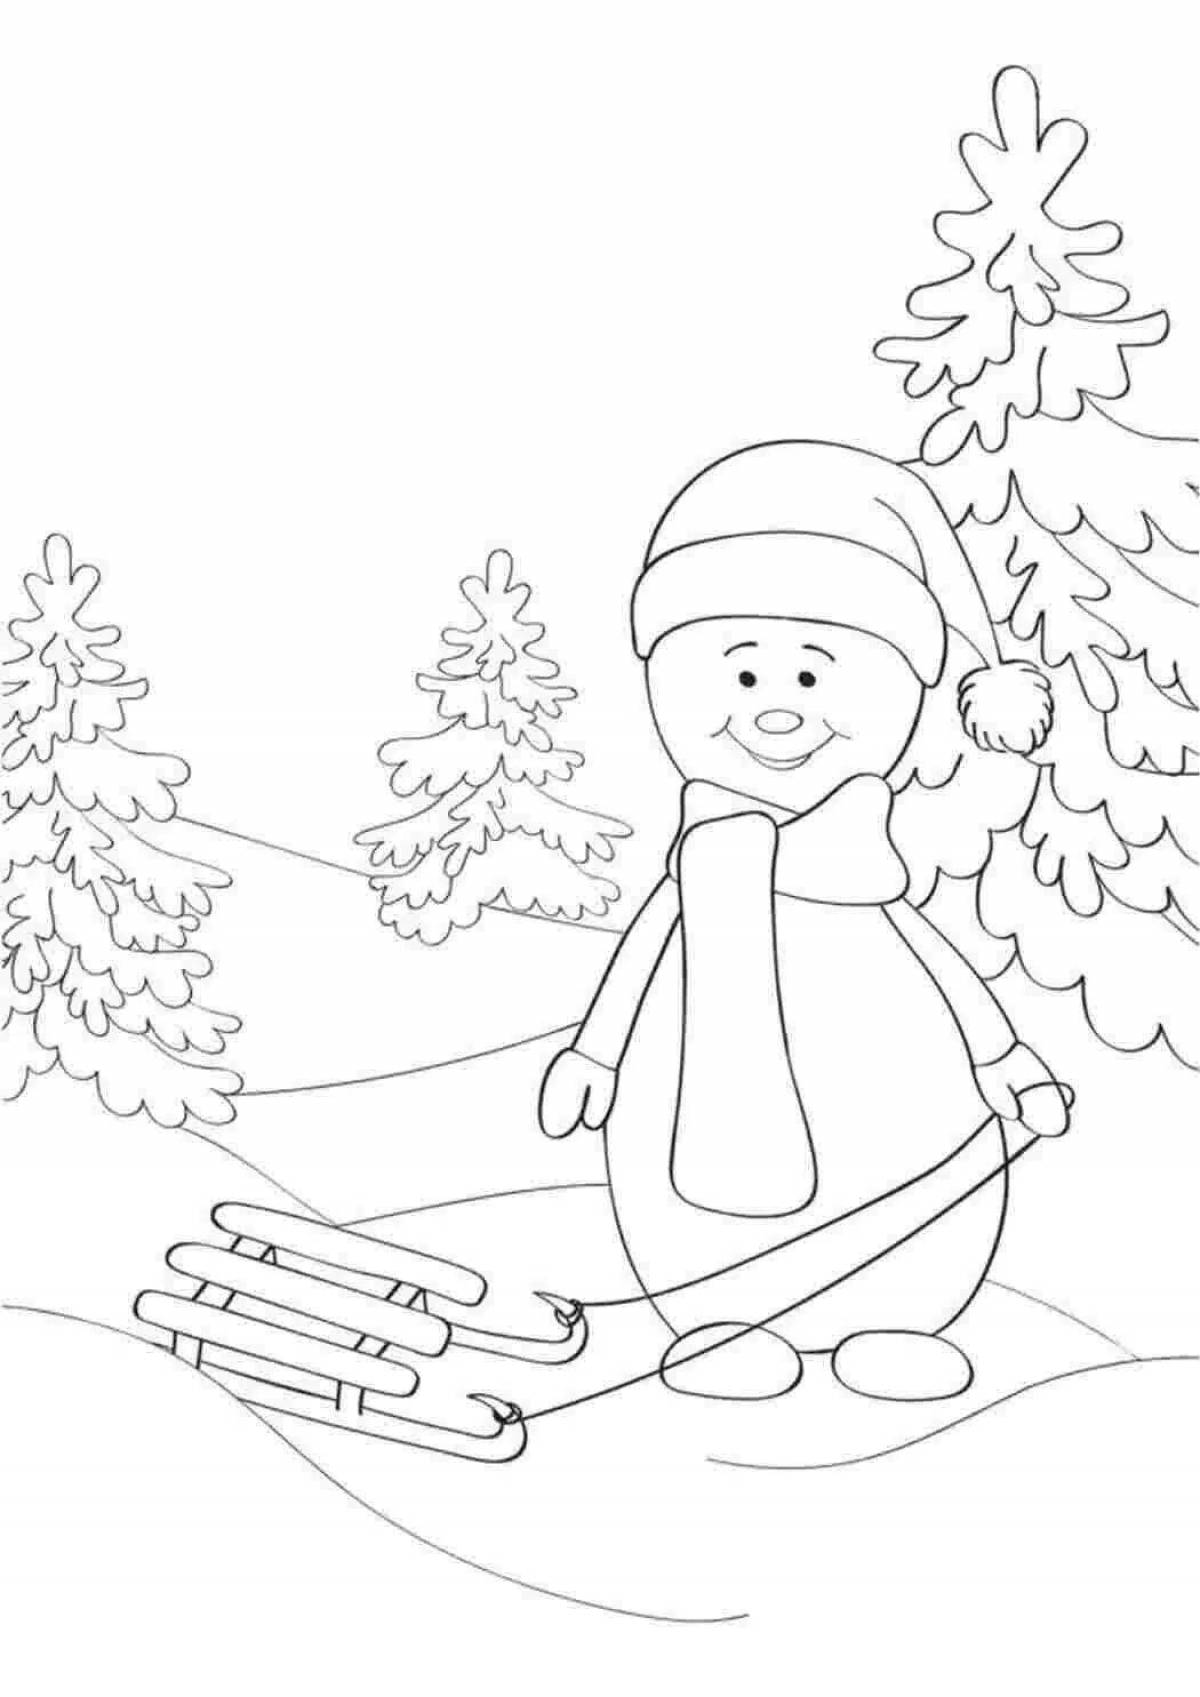 Rampant snowman skiing coloring page